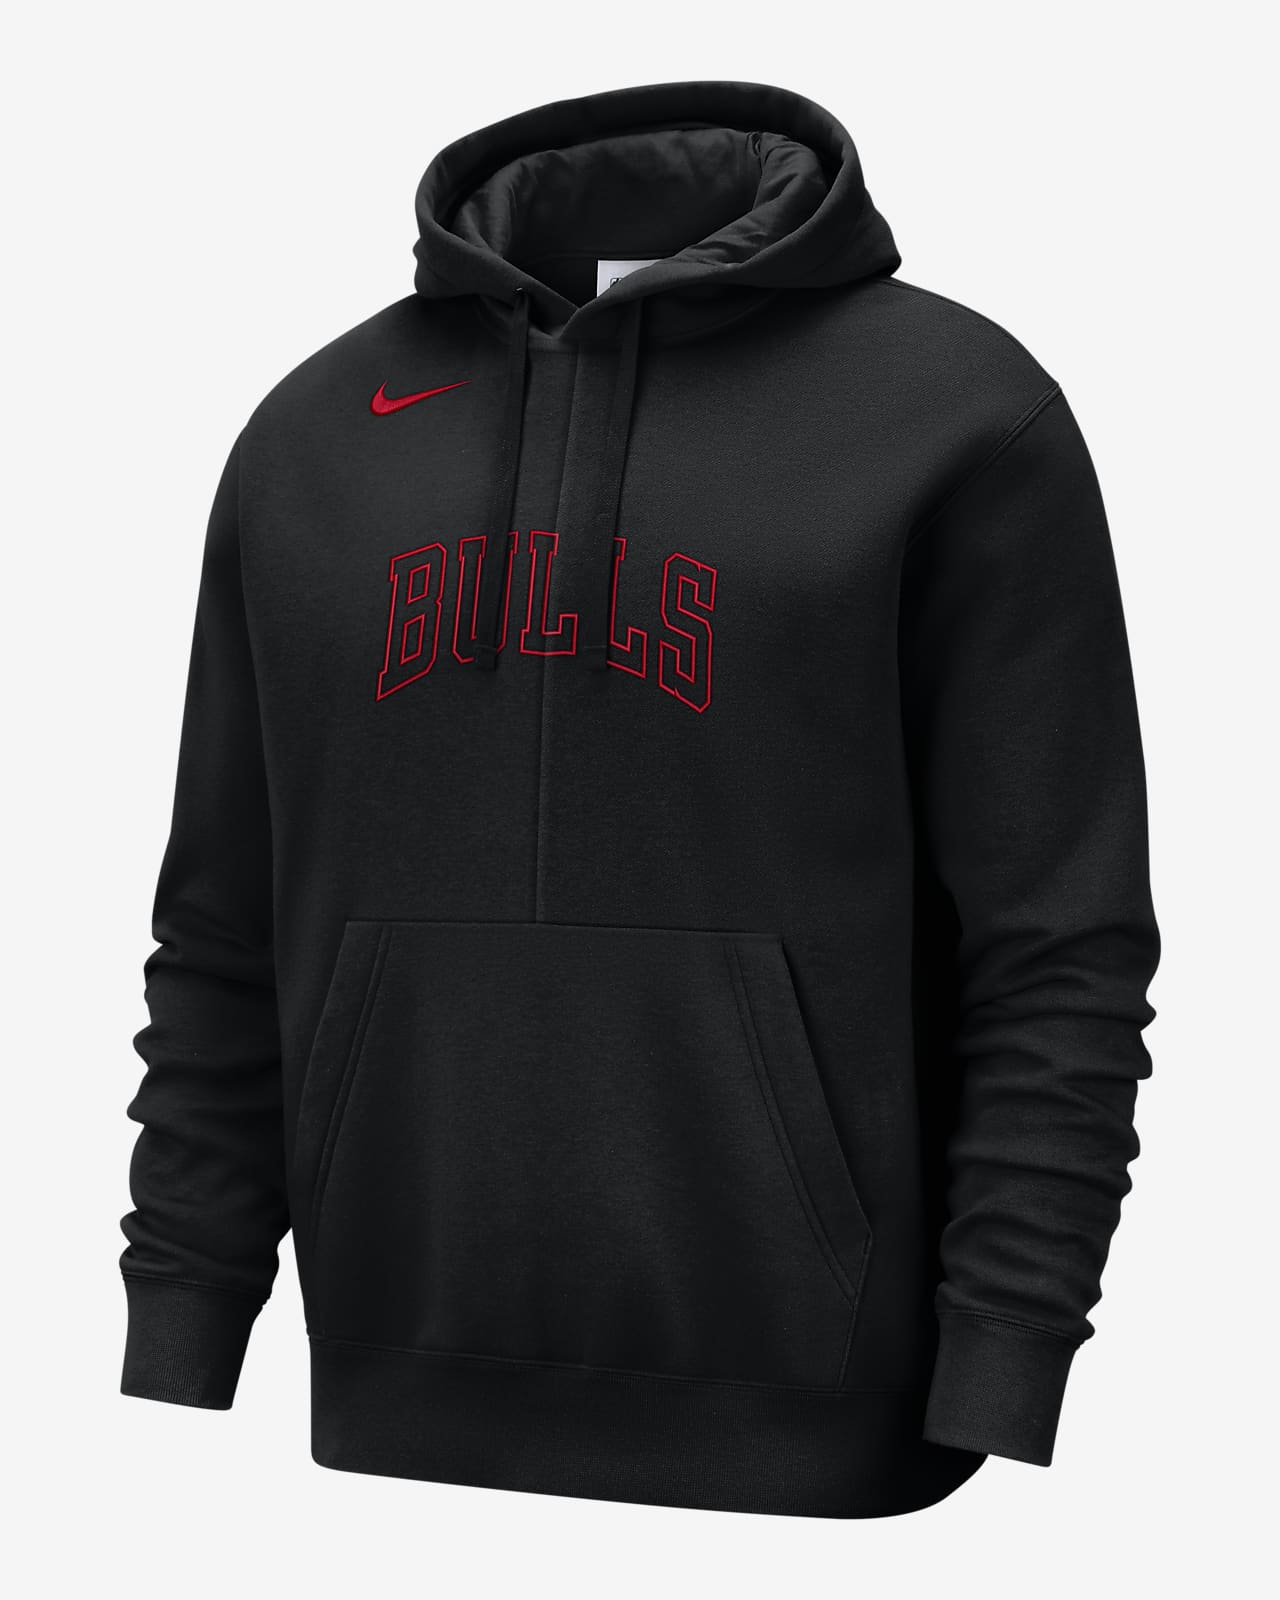 Chicago Bulls Nike Sweatshirts, Nike Bulls Hoodies